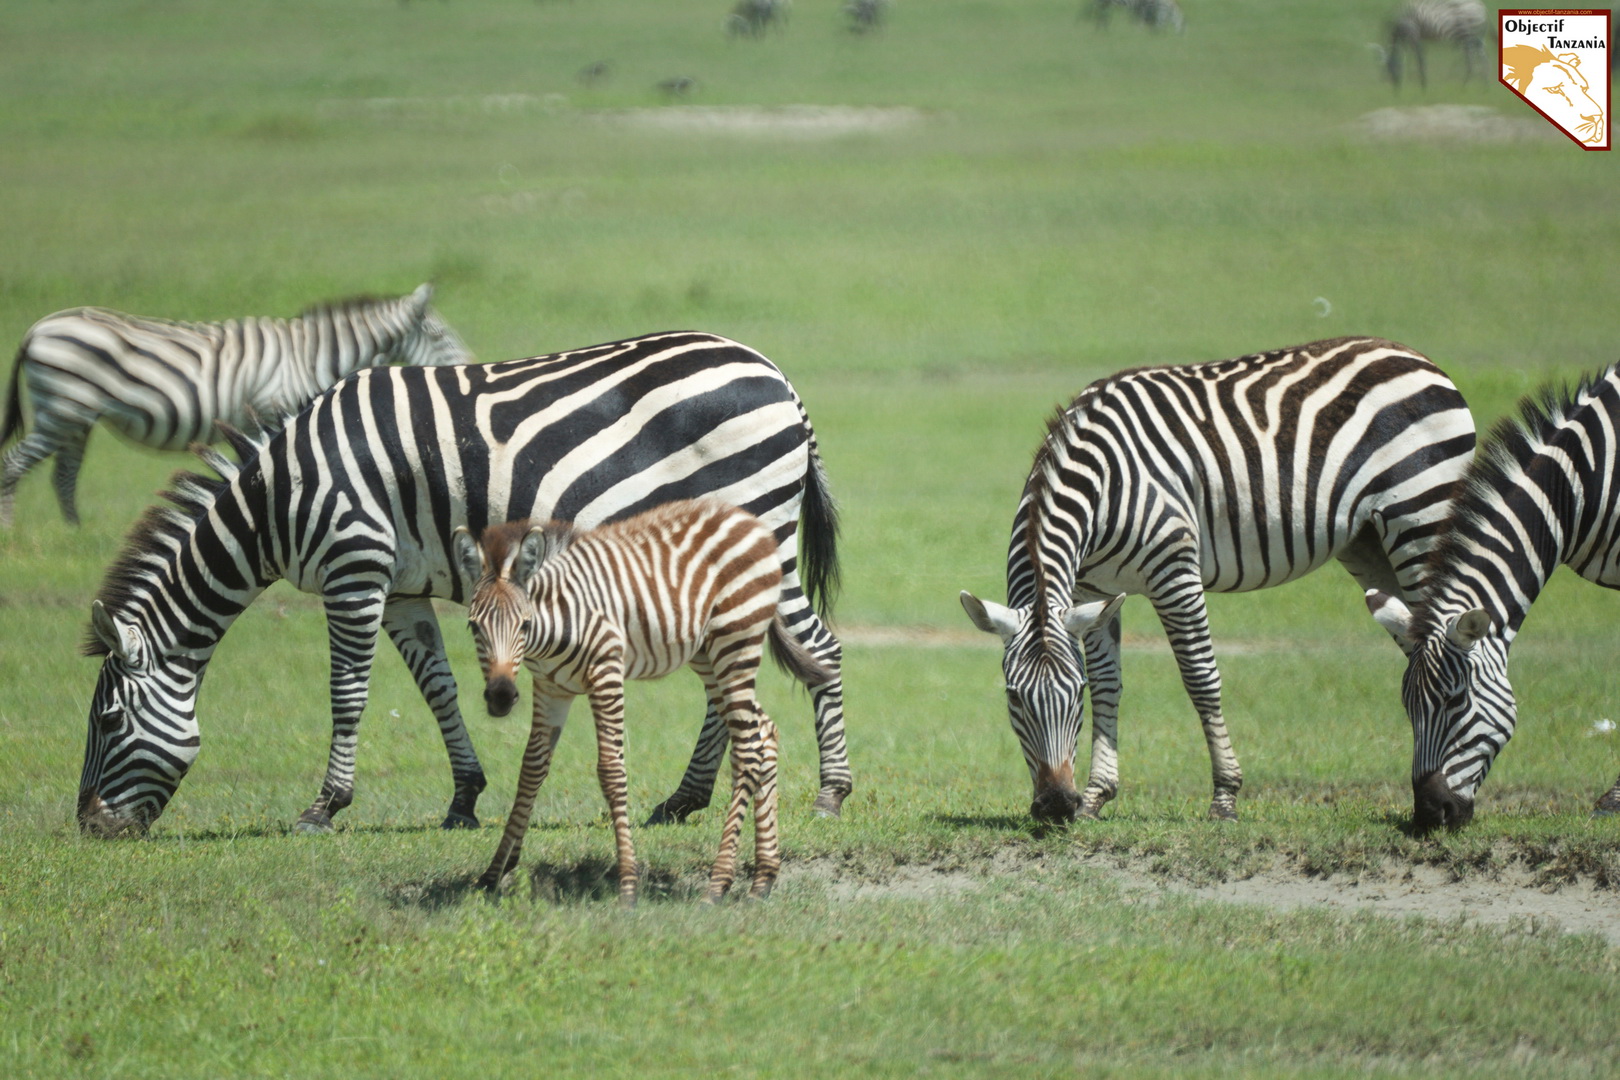 Votre safari à la carte en Tanzanie par OBJECTIF TANZANIA - Organisez votre safari sur mesure - safari de luxe